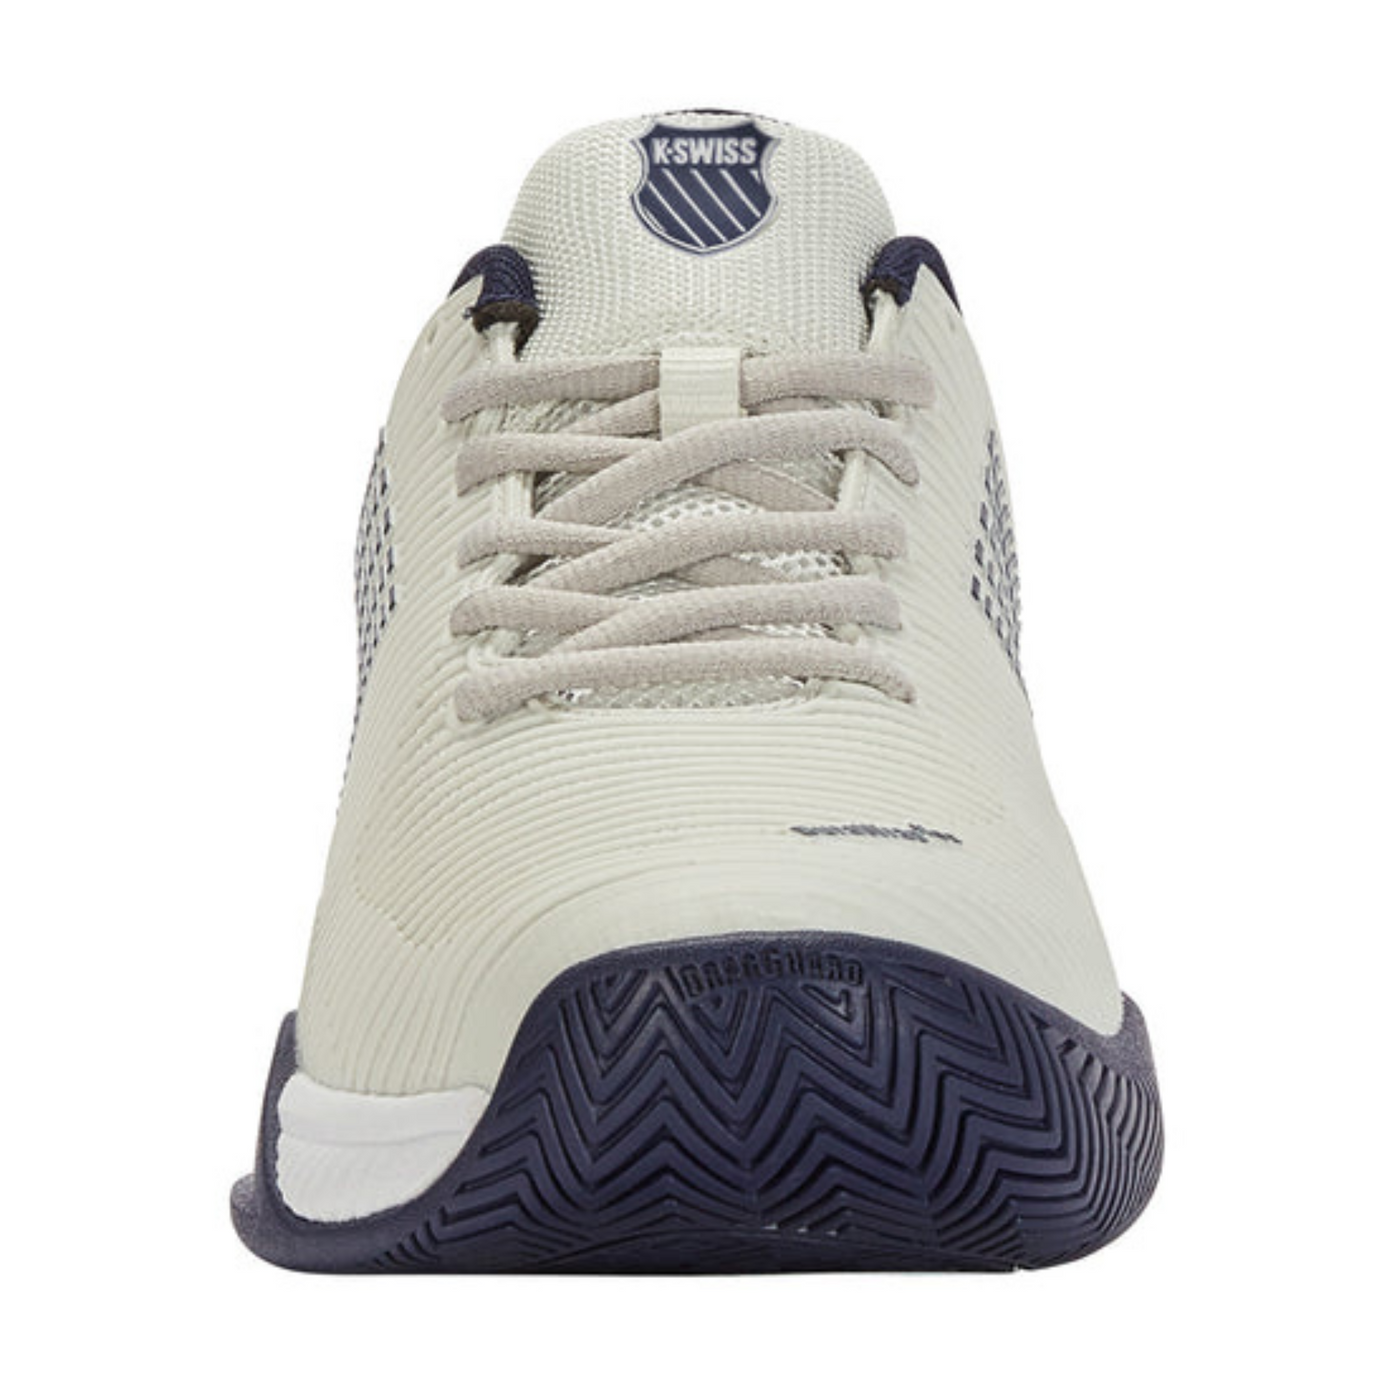 K Swiss Hypercourt Express 2 Junior Tennis Shoes - Gray/White/Peacoat